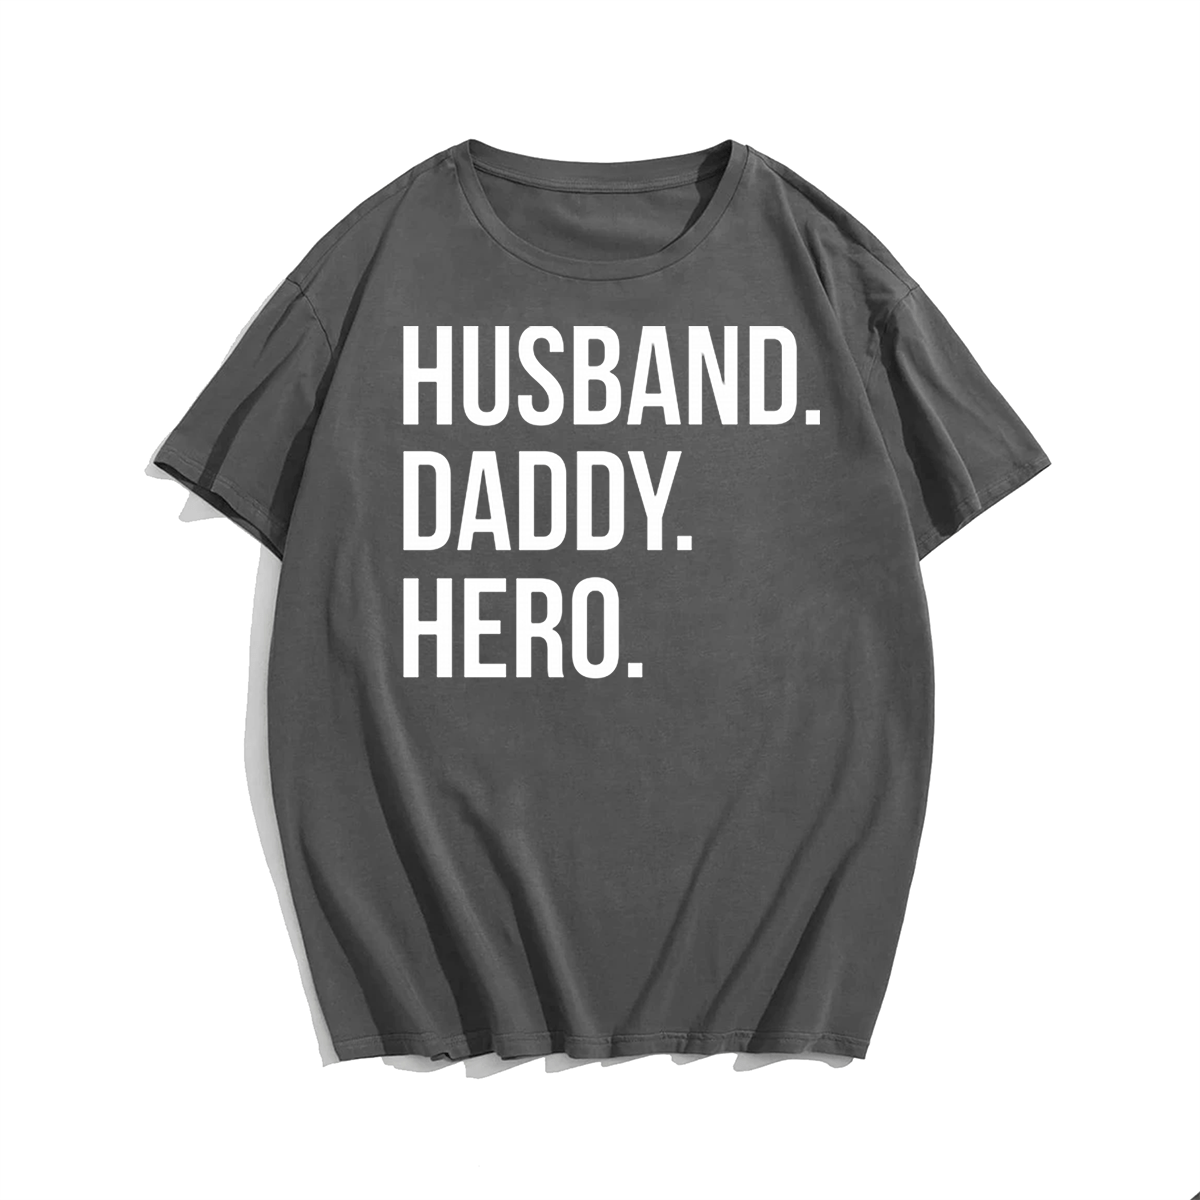 Husband Daddy Hero T-shirt for Men, Oversize Plus Size Big & Tall Man Clothing